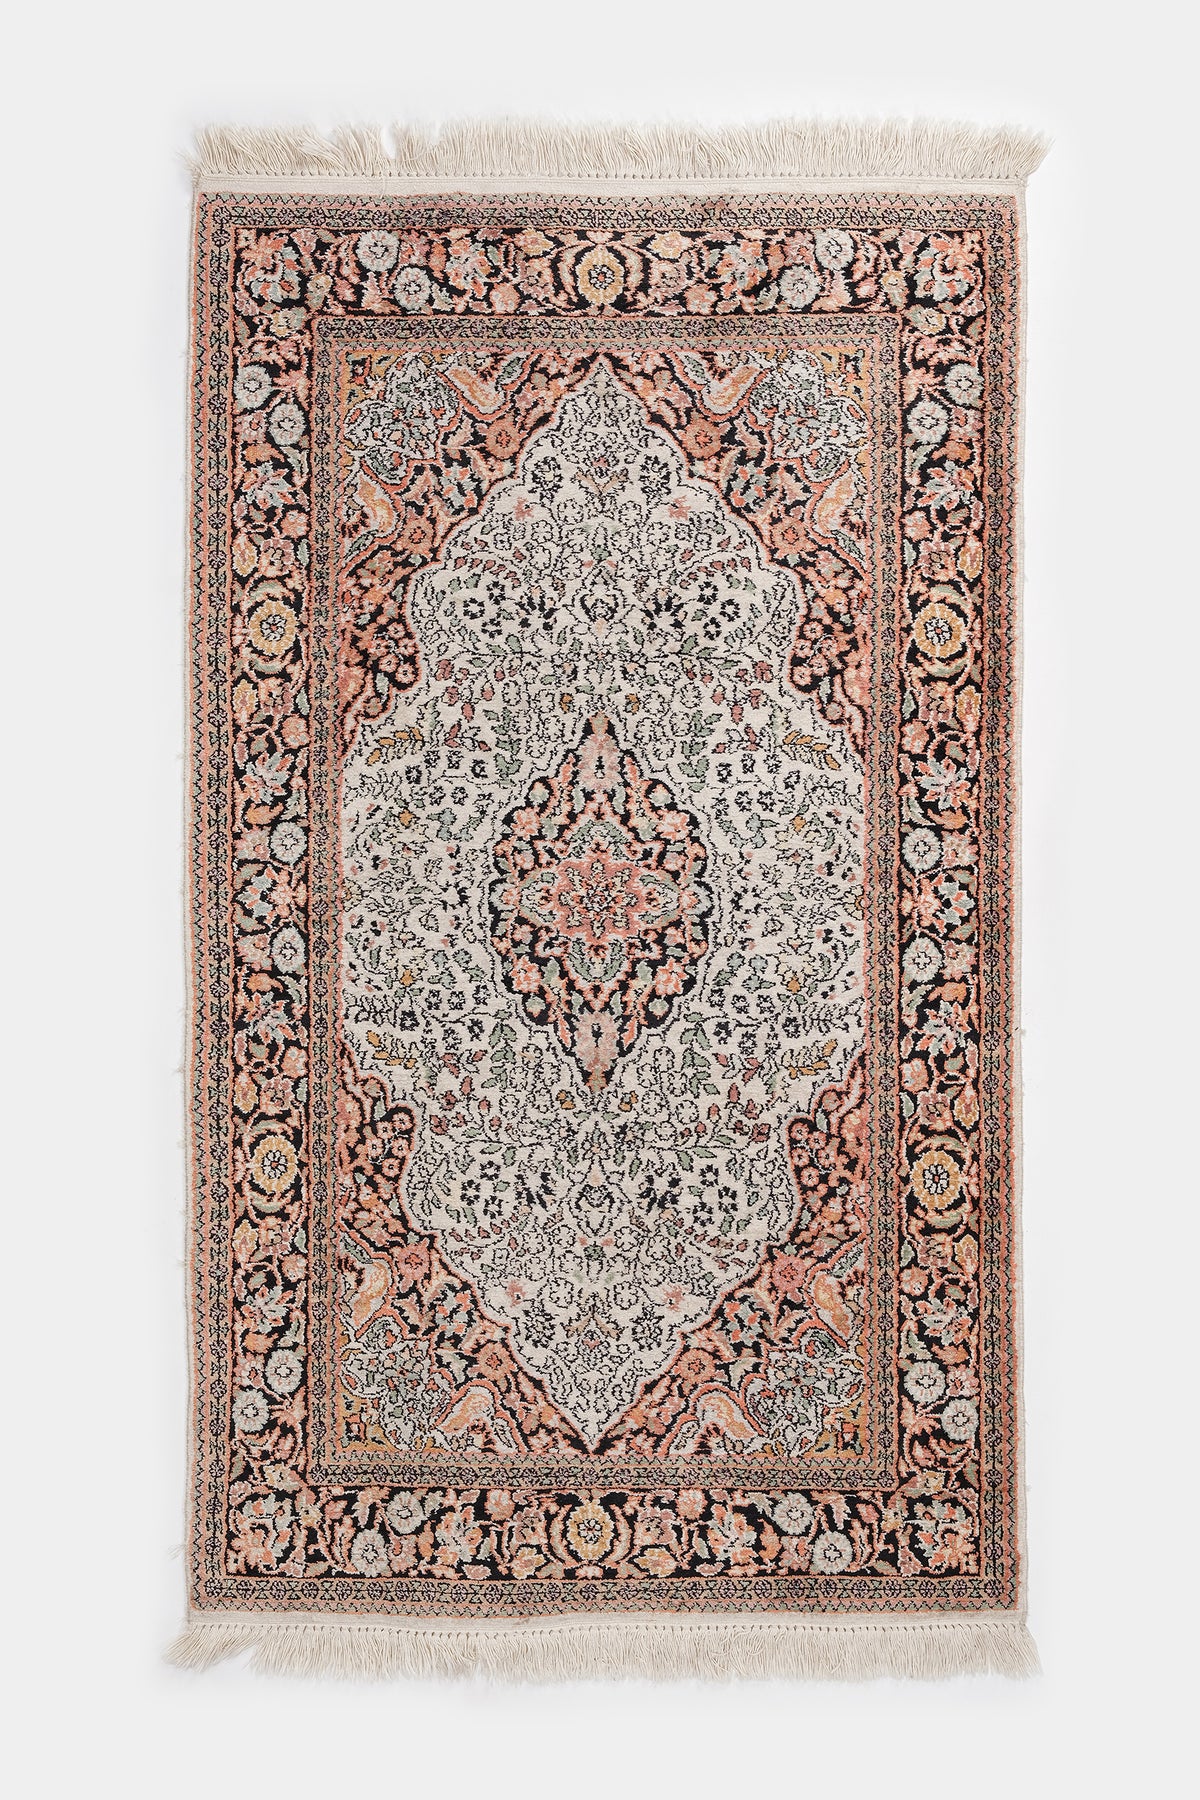 Carpet, Kashmir, 1930